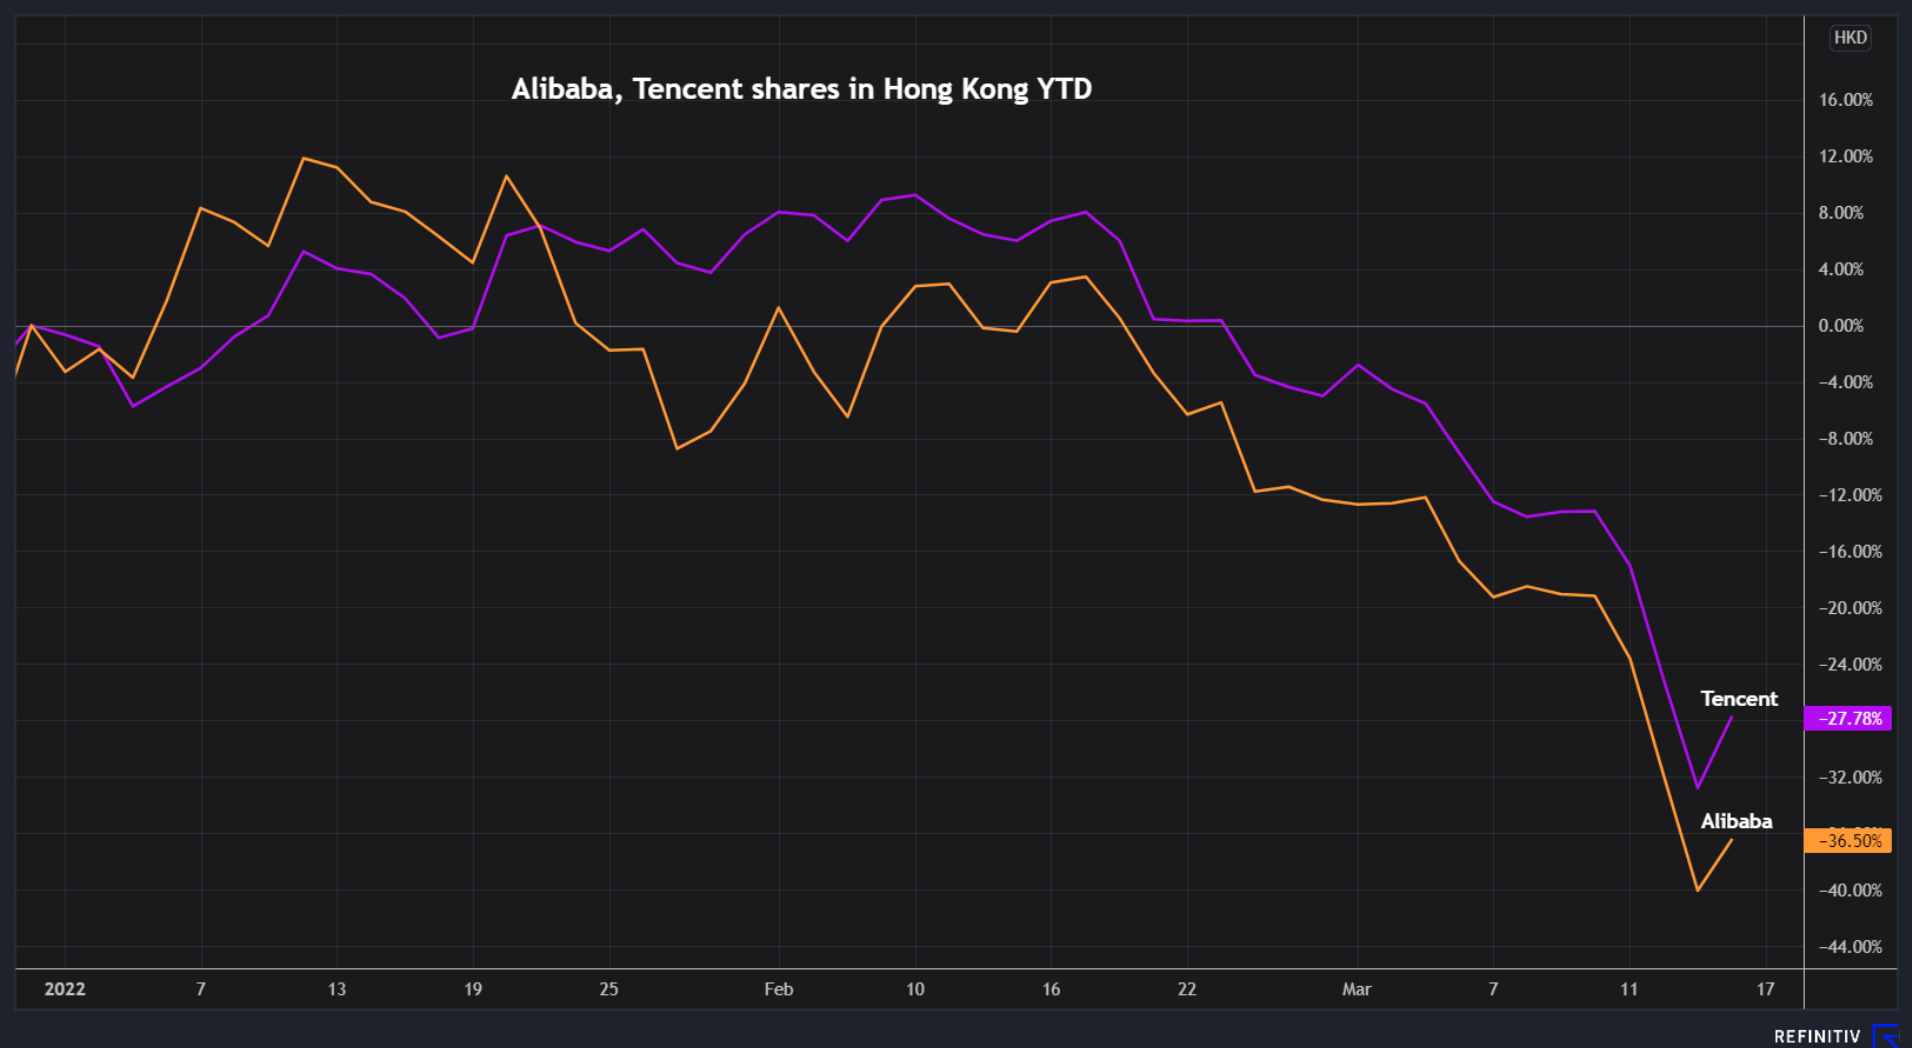 Alibaba and Tencent